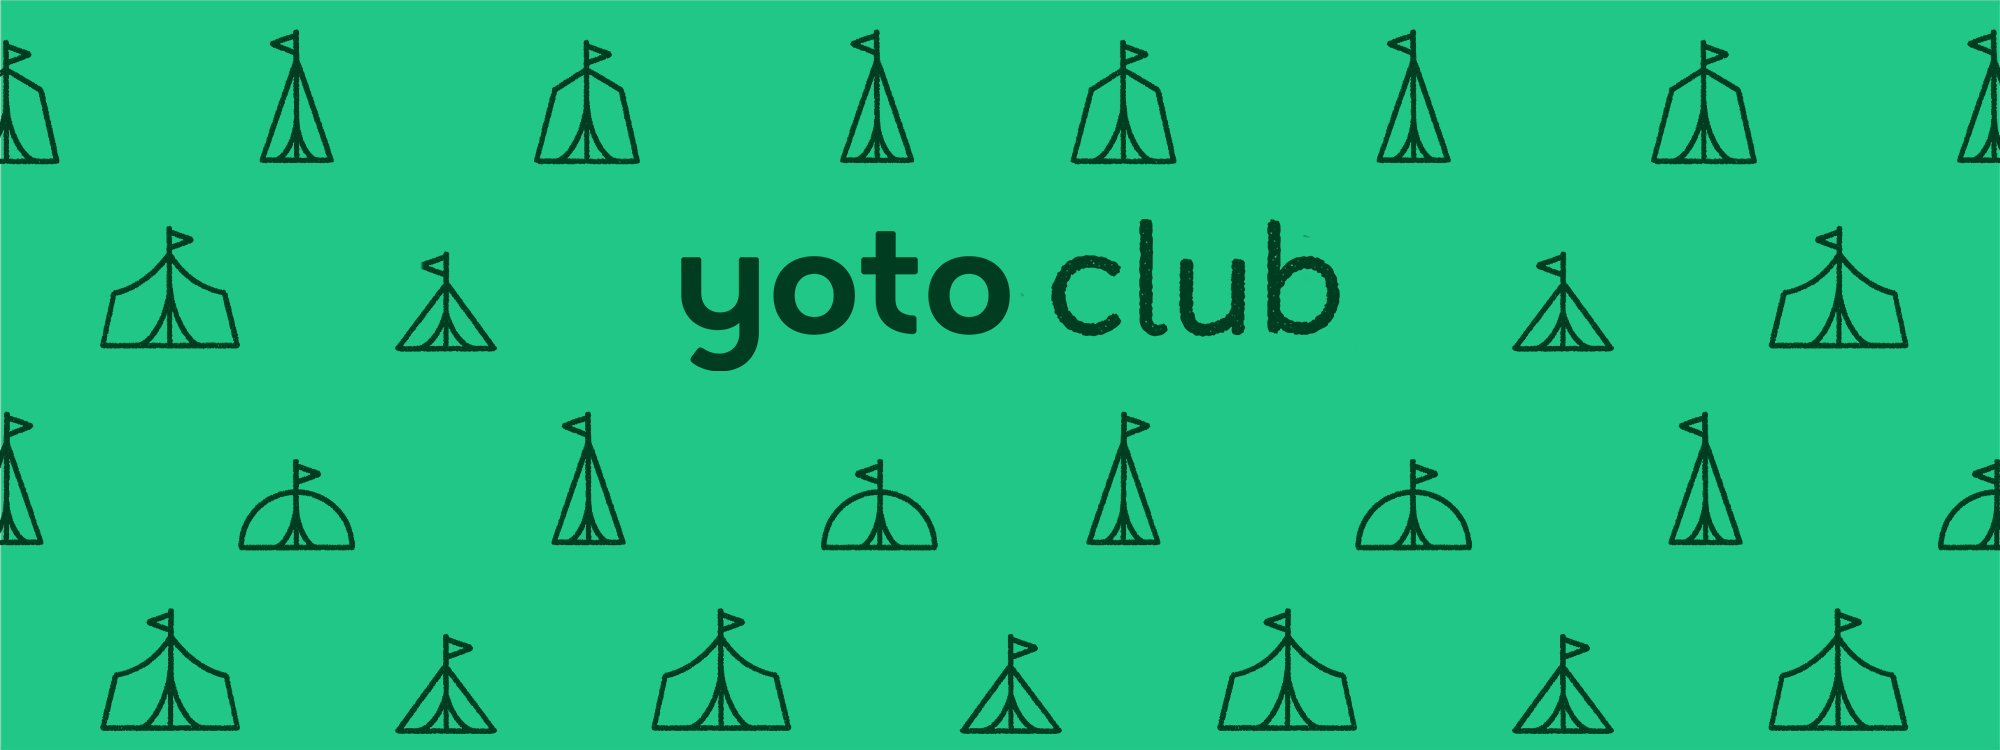 New Yoto Club is here!